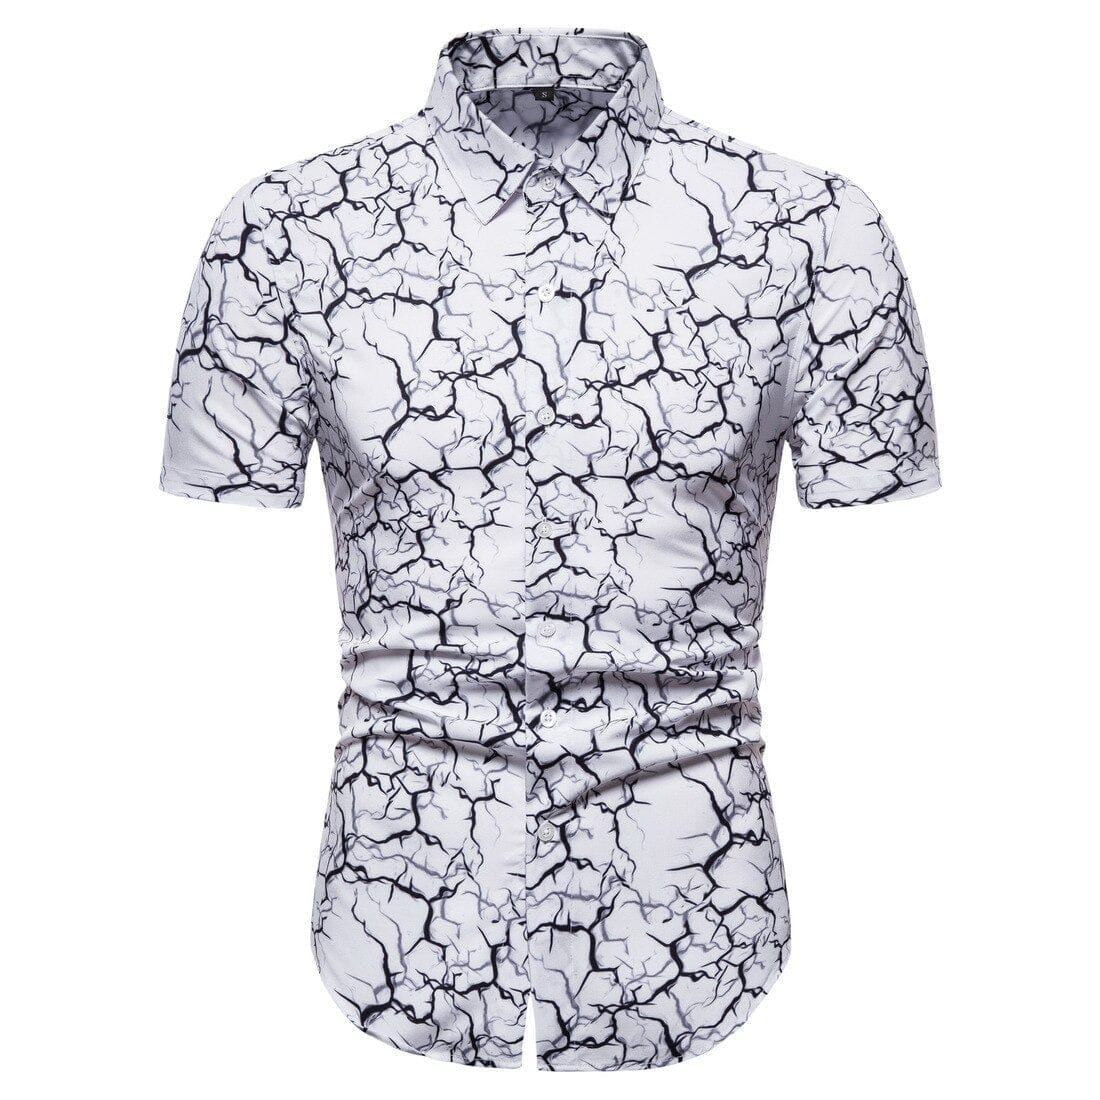 Men's Short Sleeve Summer Striped Casual Turn-down Collar Shirt S-3XL BENNYS 